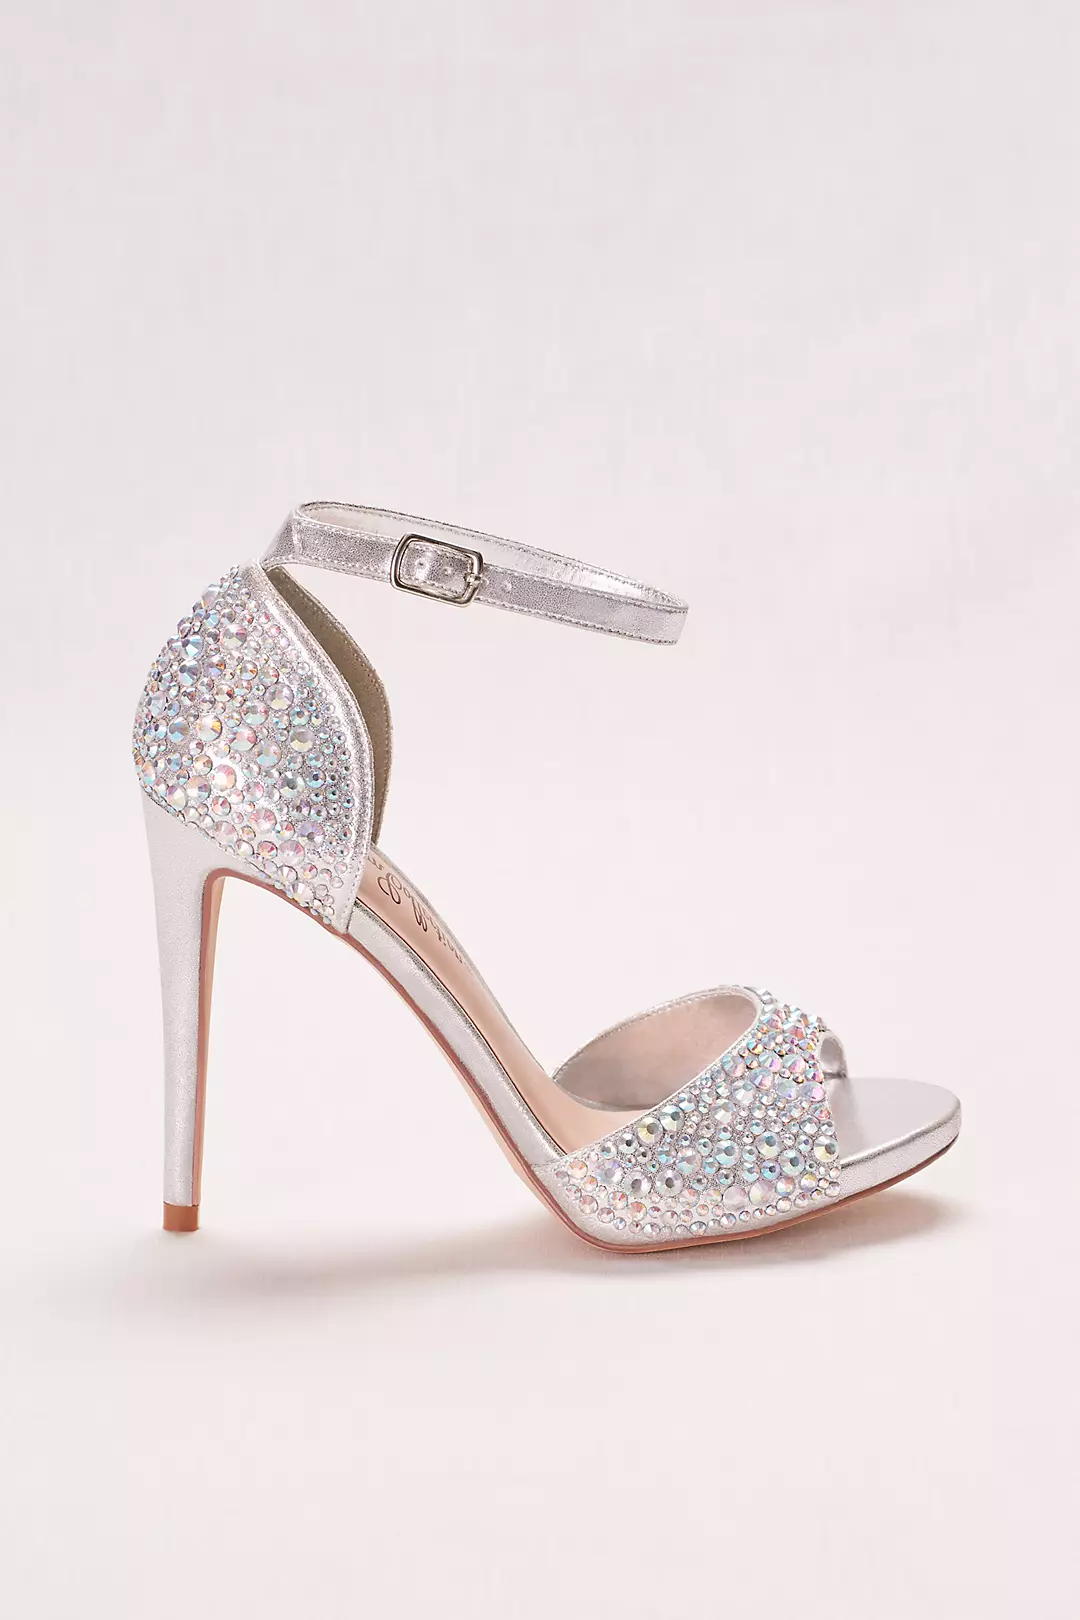 Crystal Peep Toe High Heel with Ankle Strap | David's Bridal